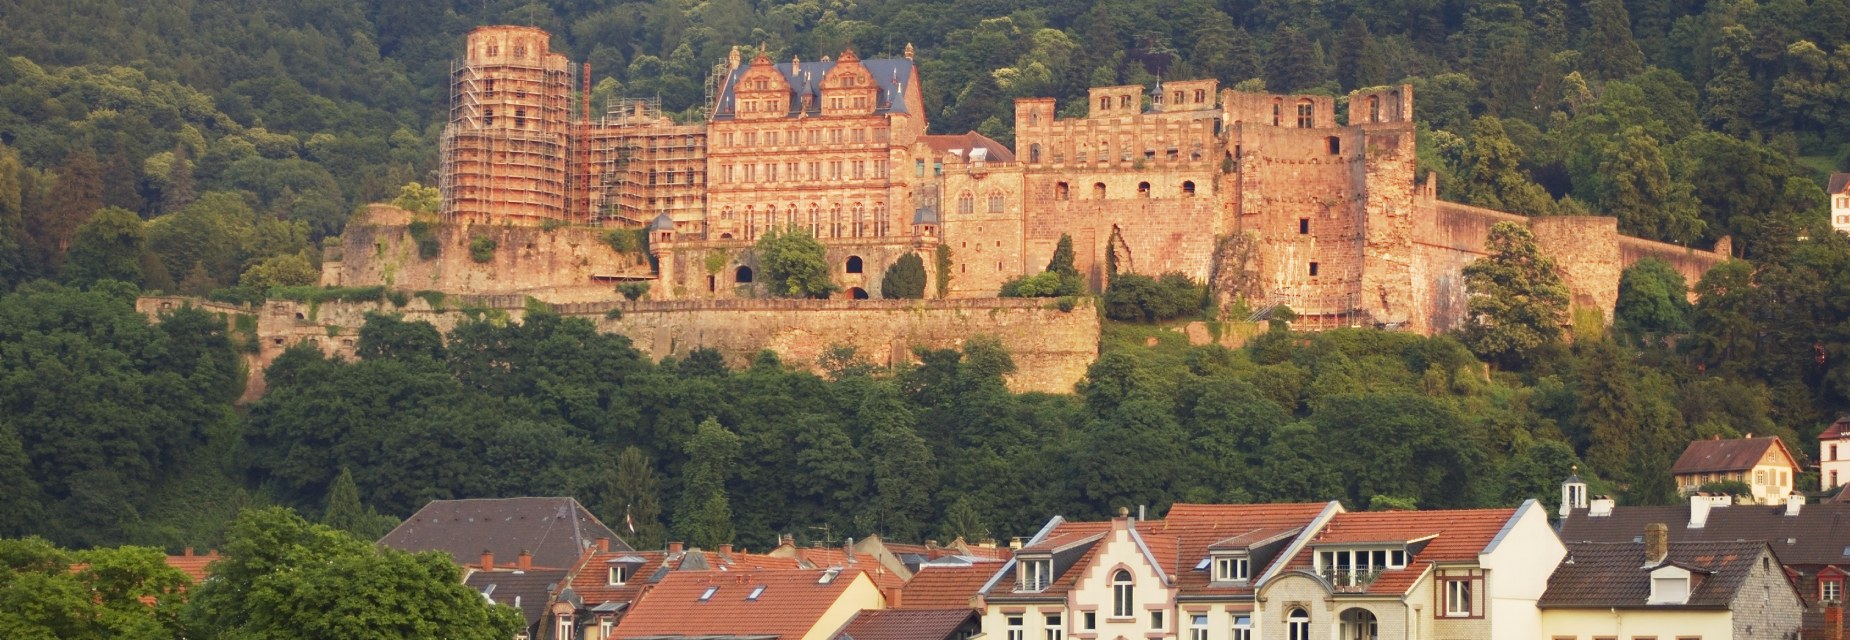 Heidelberg Castle #21